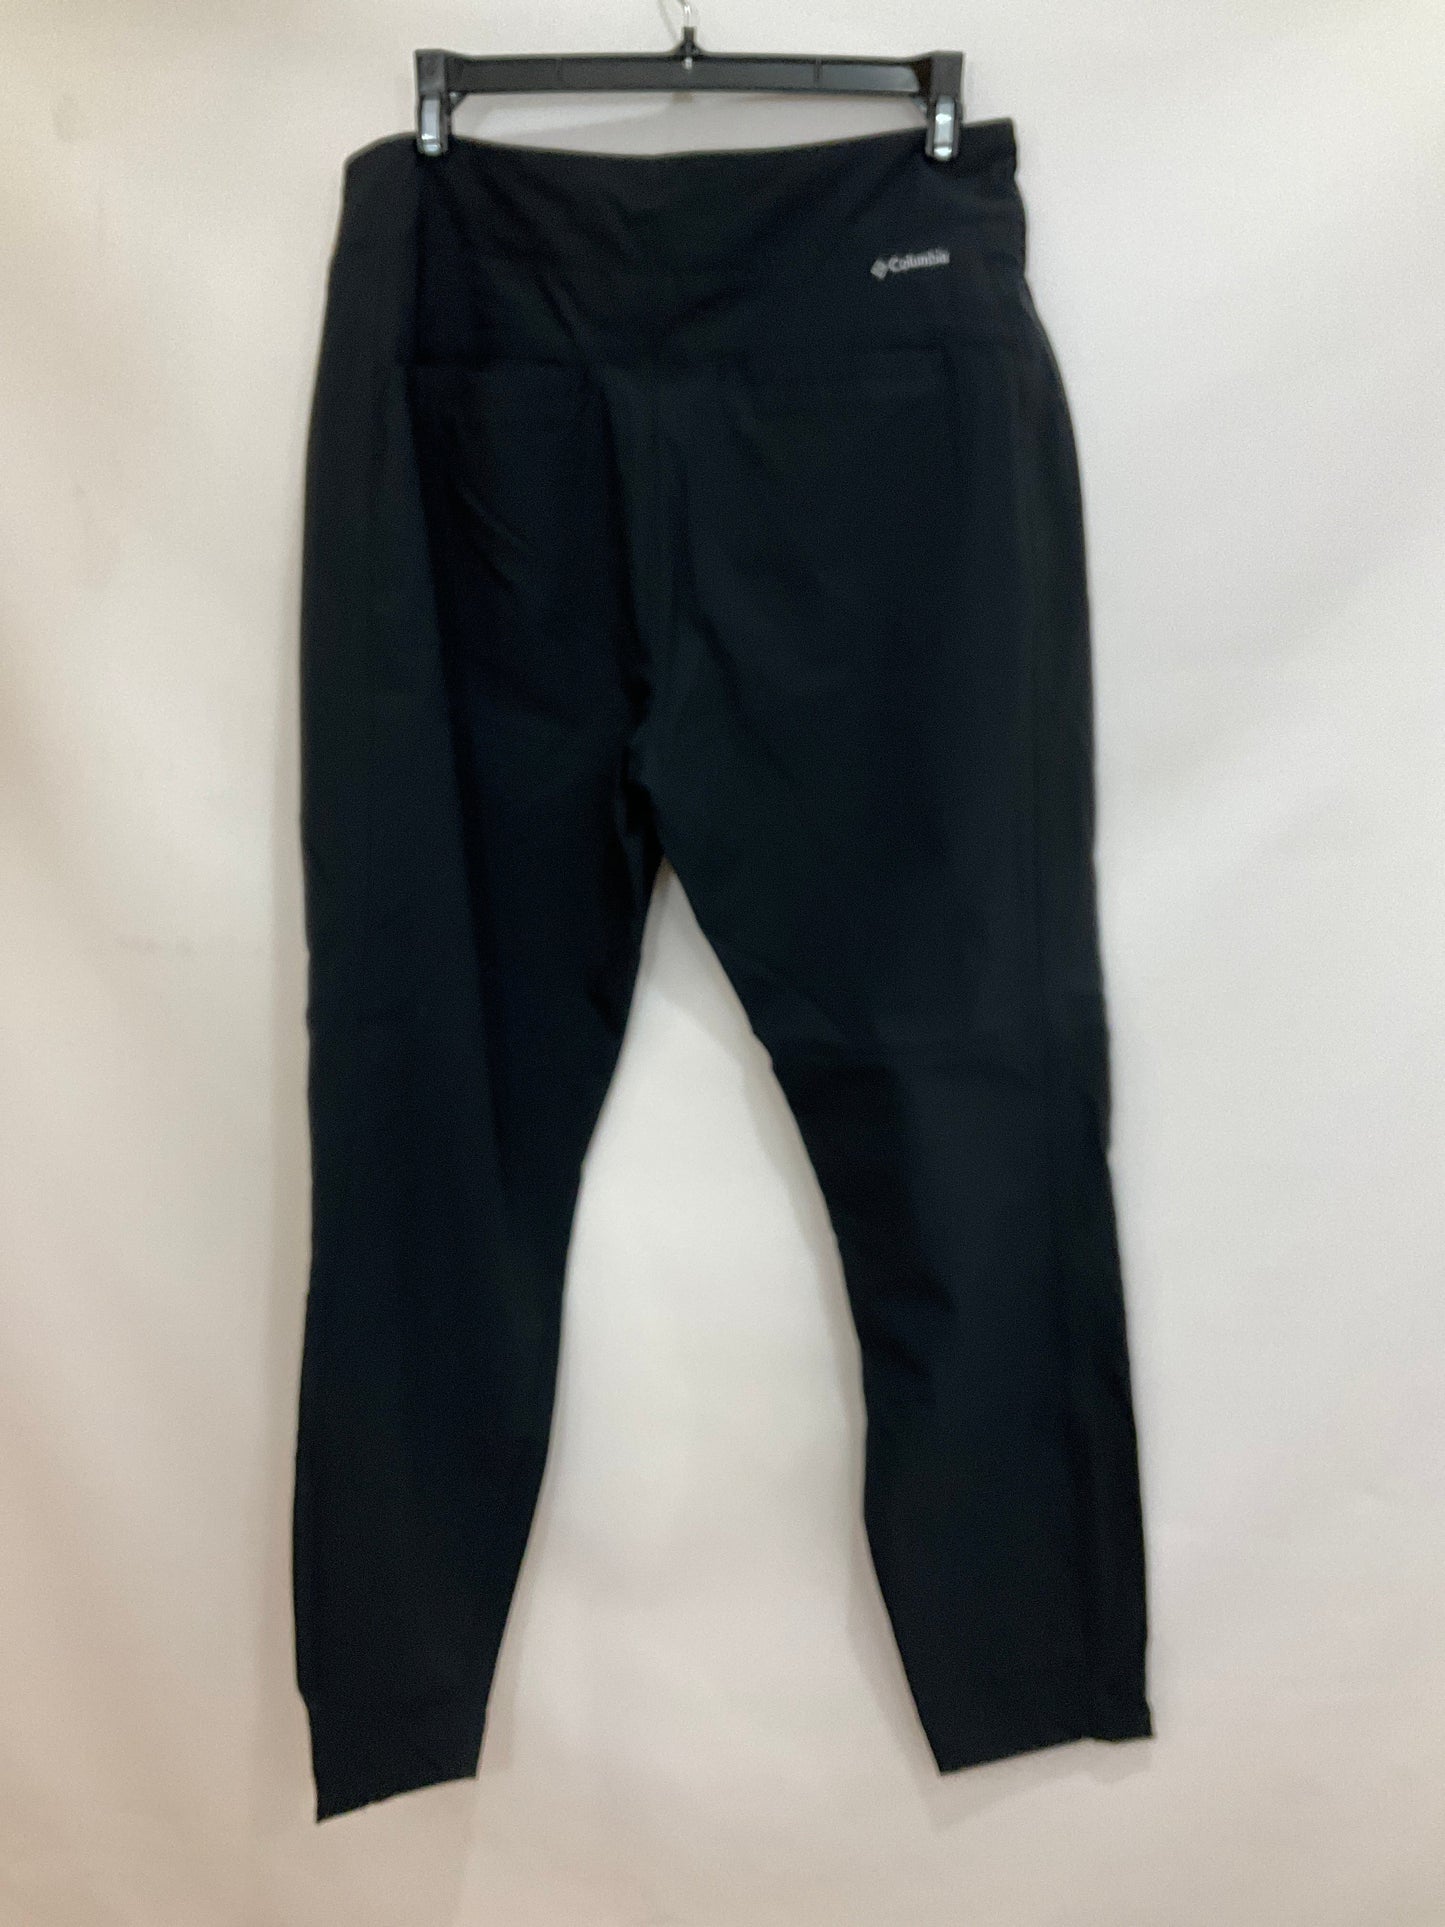 Black Athletic Pants Columbia, Size M